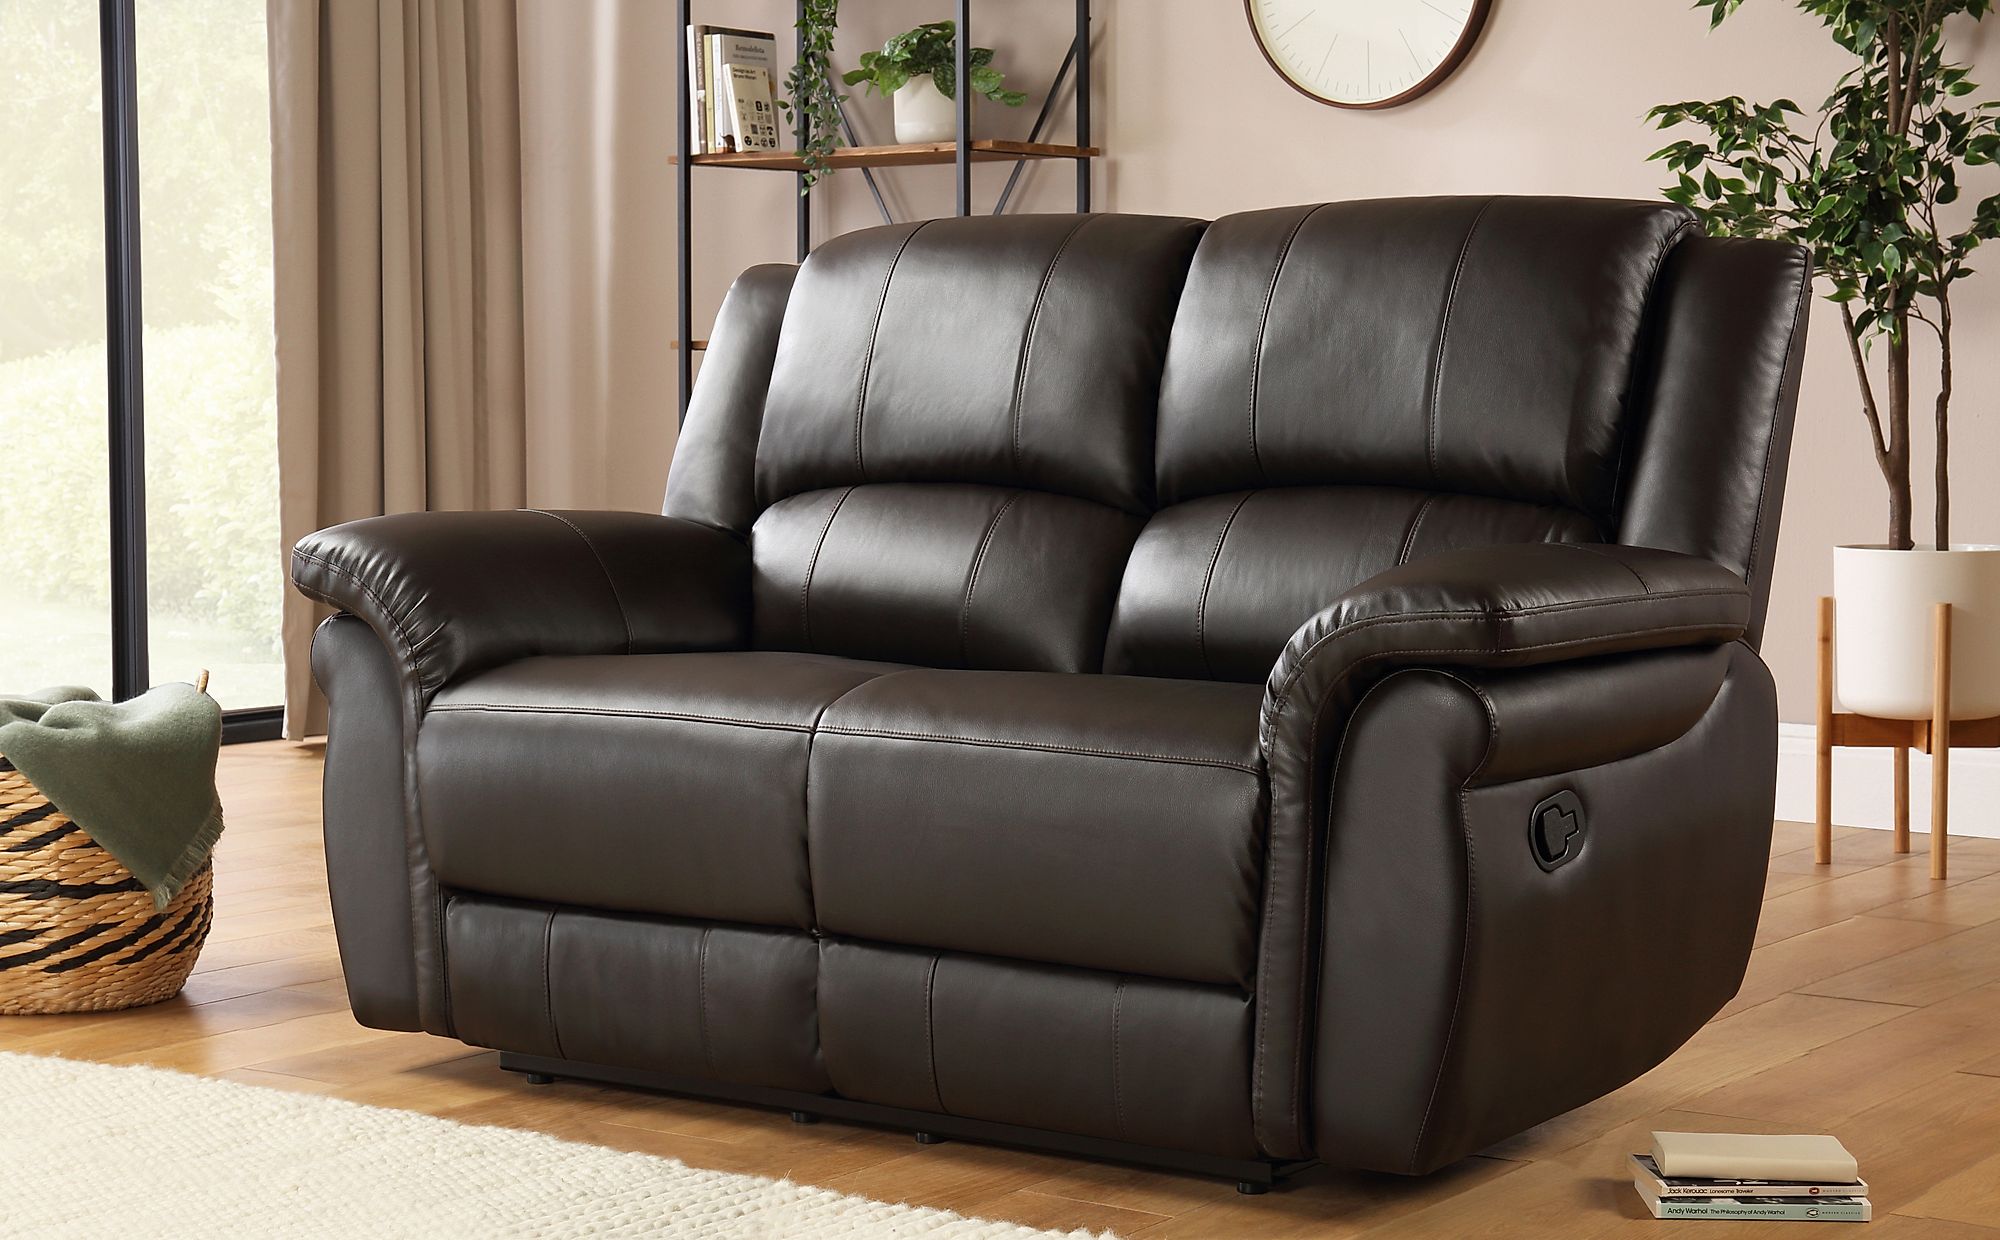 49+ 2 Seater Brown Leather Recliner Sofa Pics Furniture Modern Minimalis